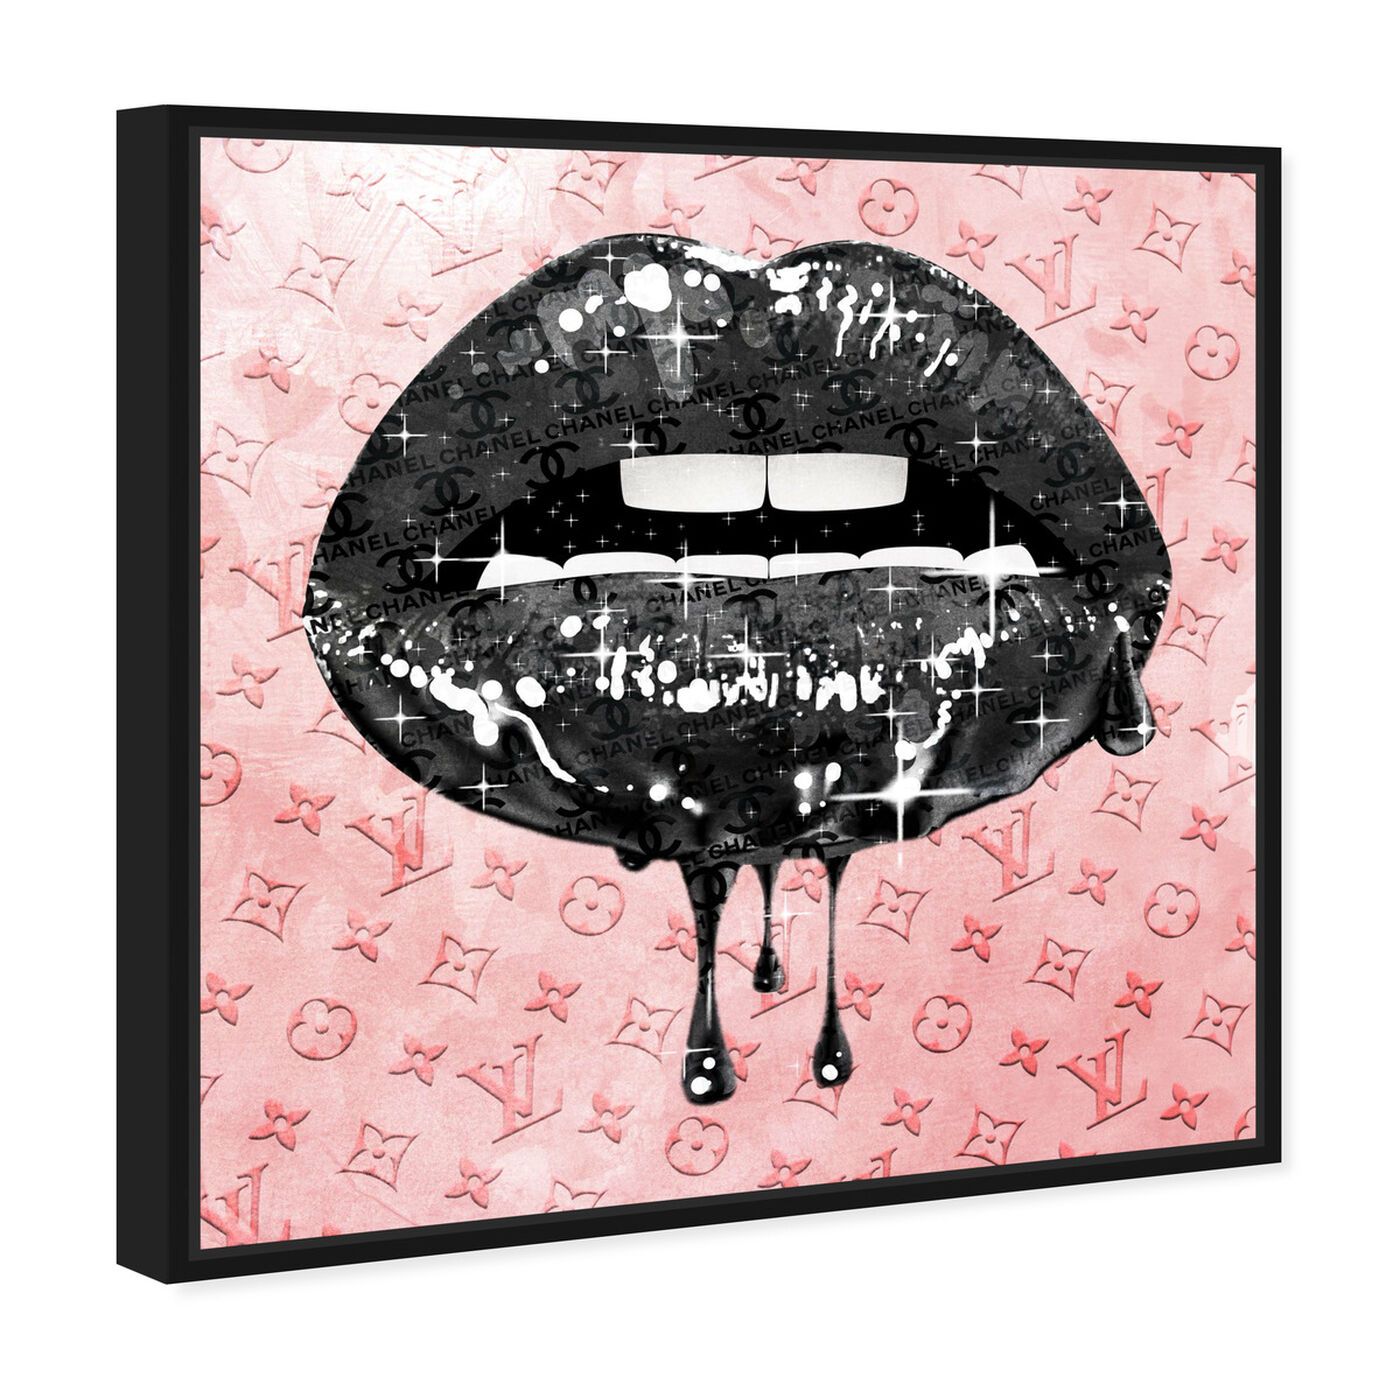 Louis Vuitton Lips Wall Art, Splash of Arts